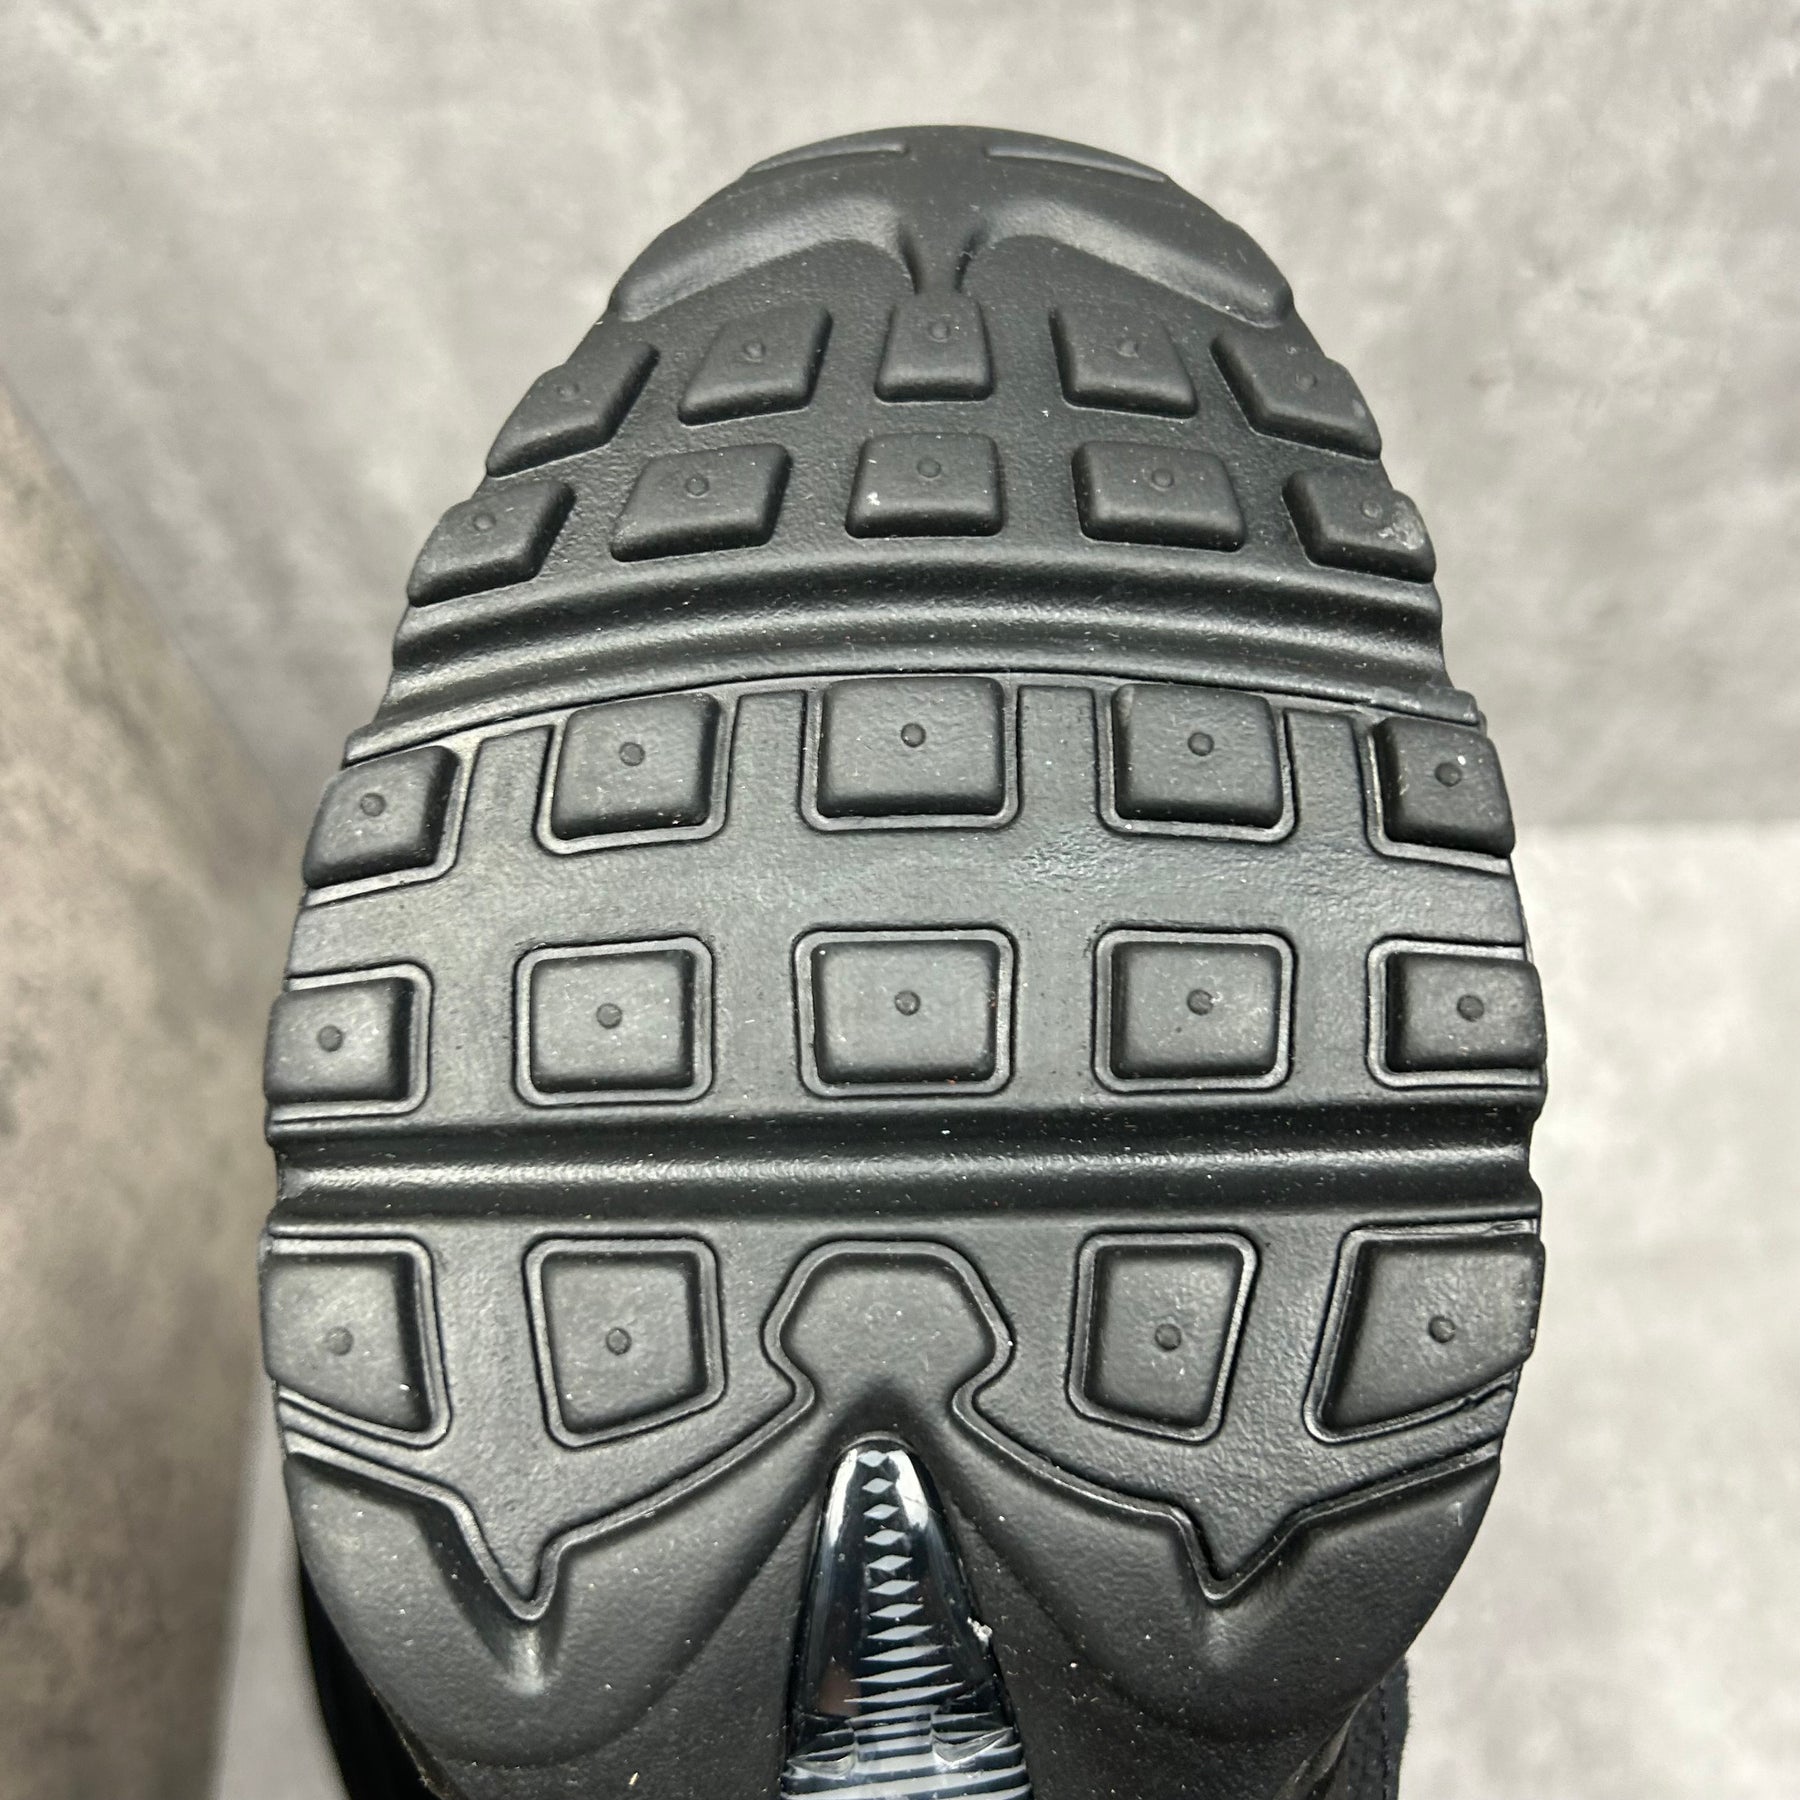 Nike Airmax 95 Triple Black